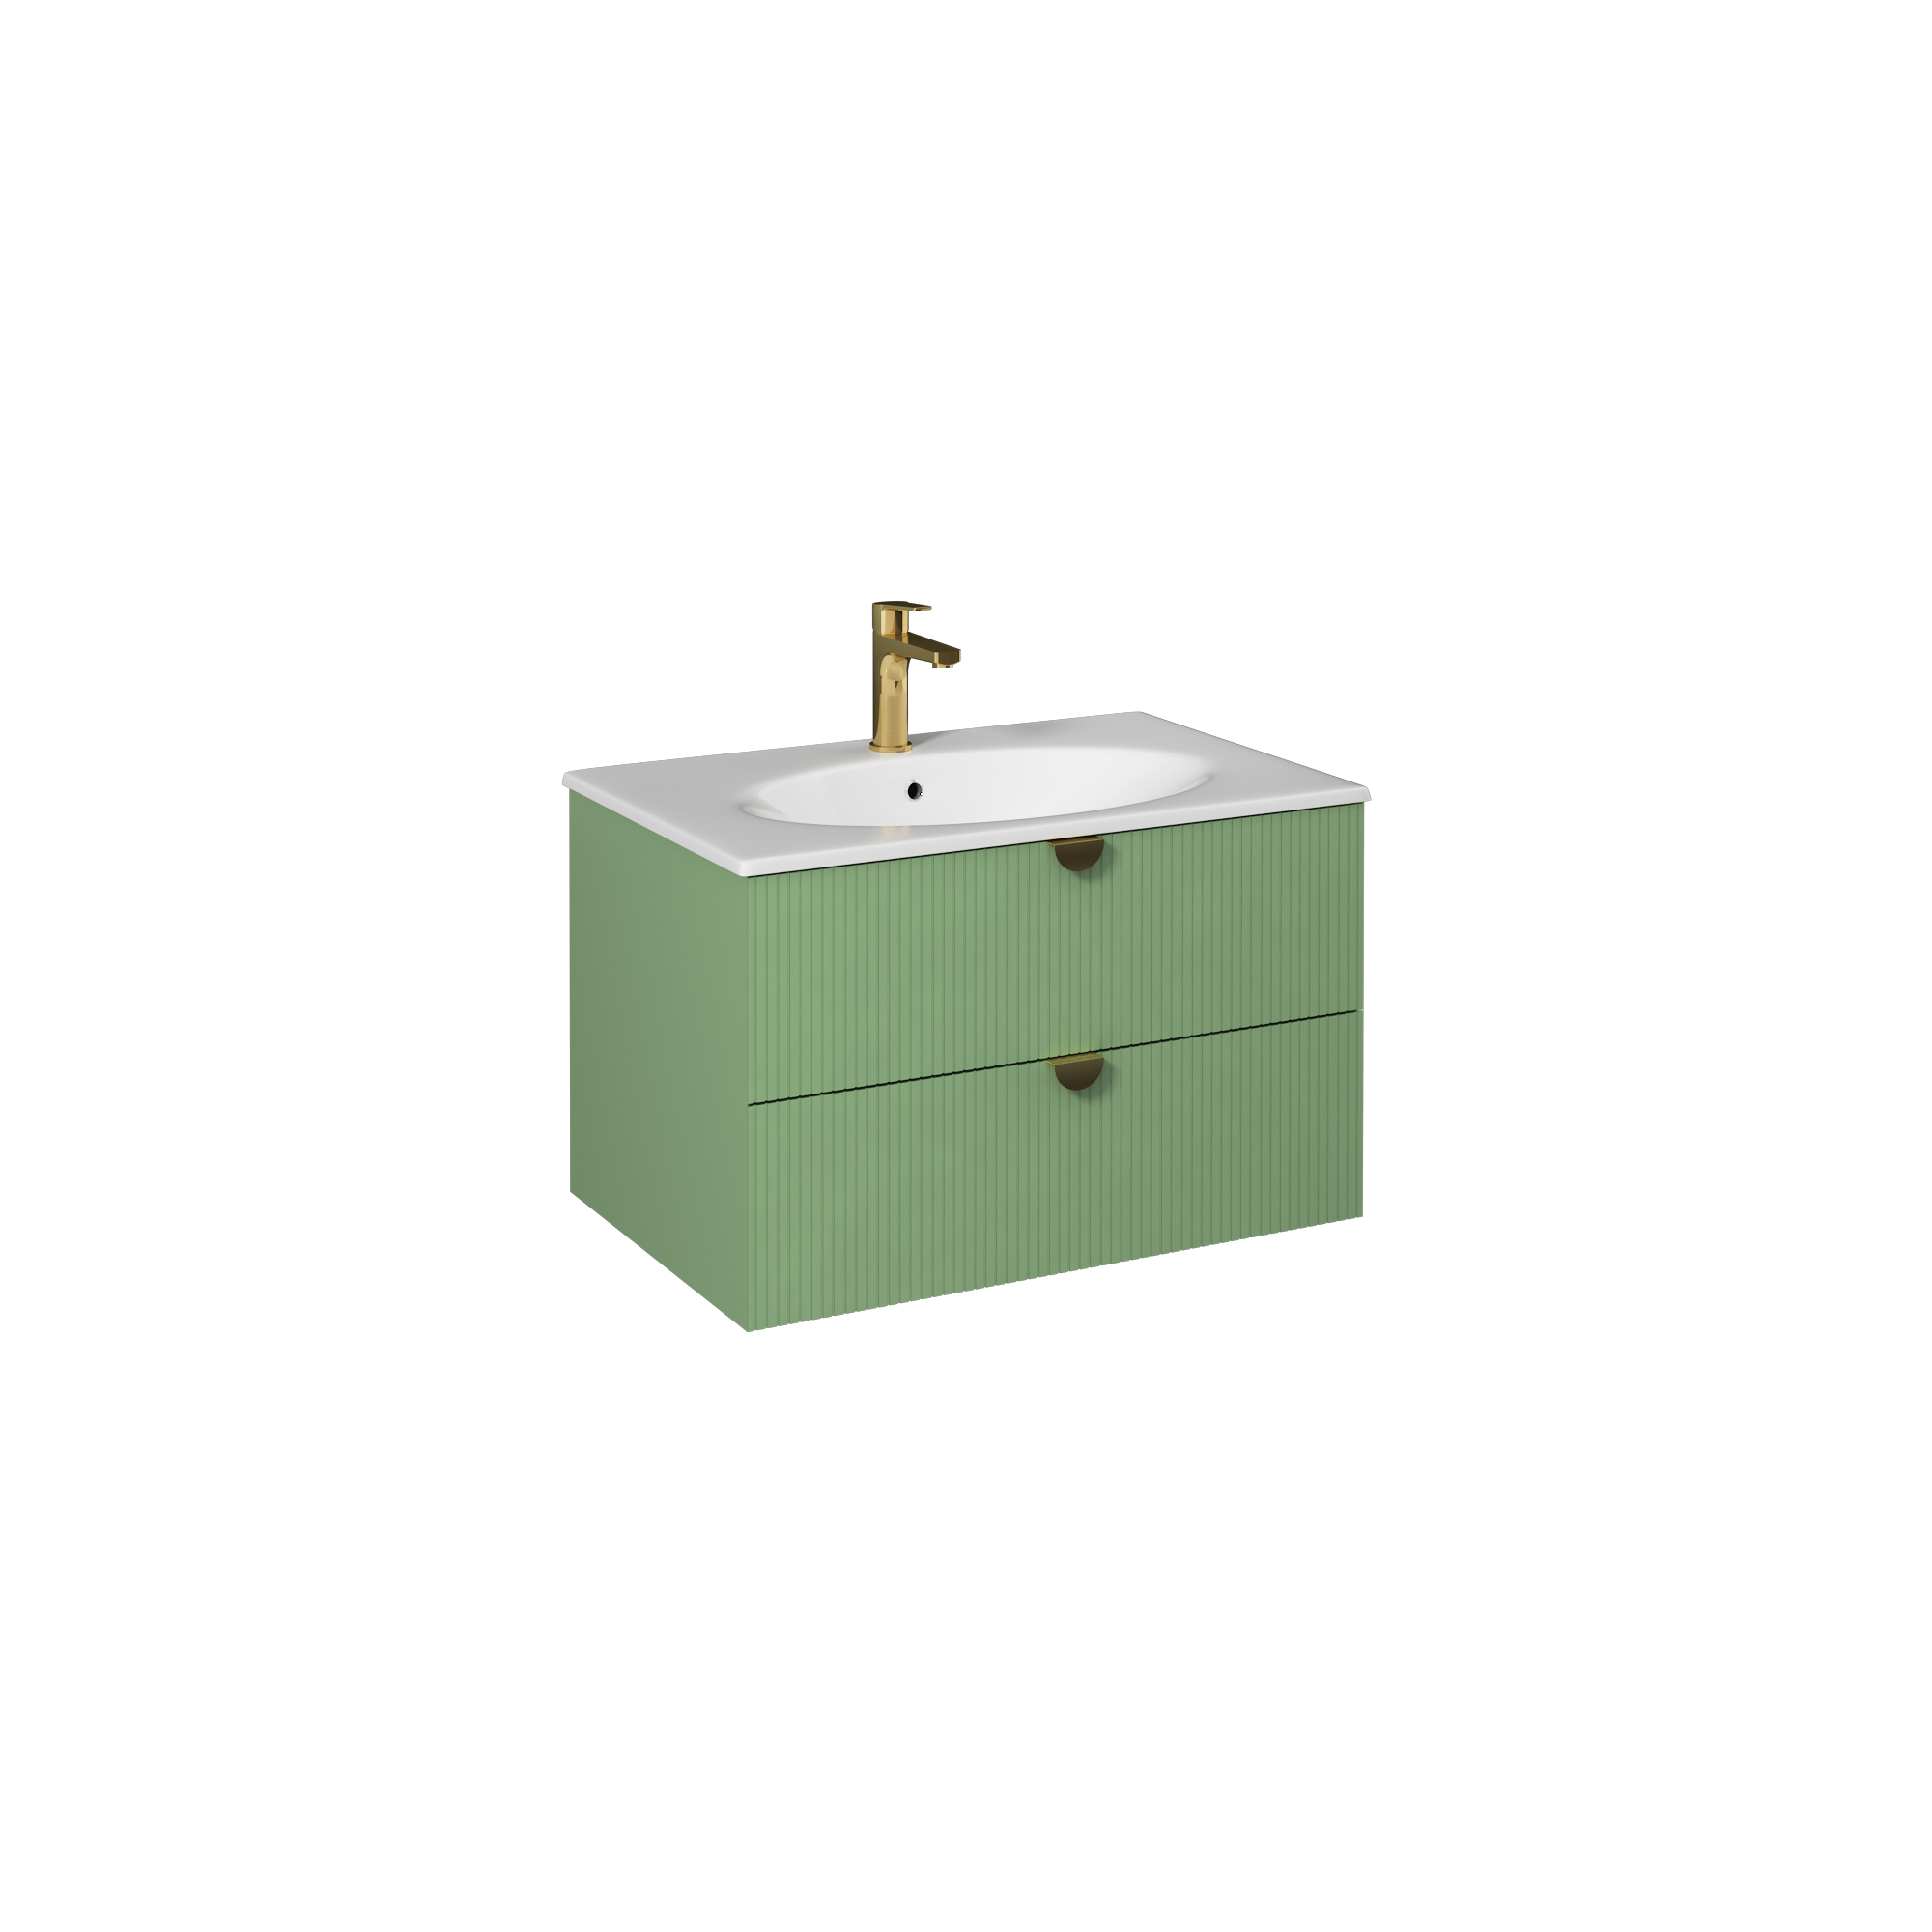 Infinity Washbasin Cabinet Ocean,  with Petrol Green Washbasi 51"